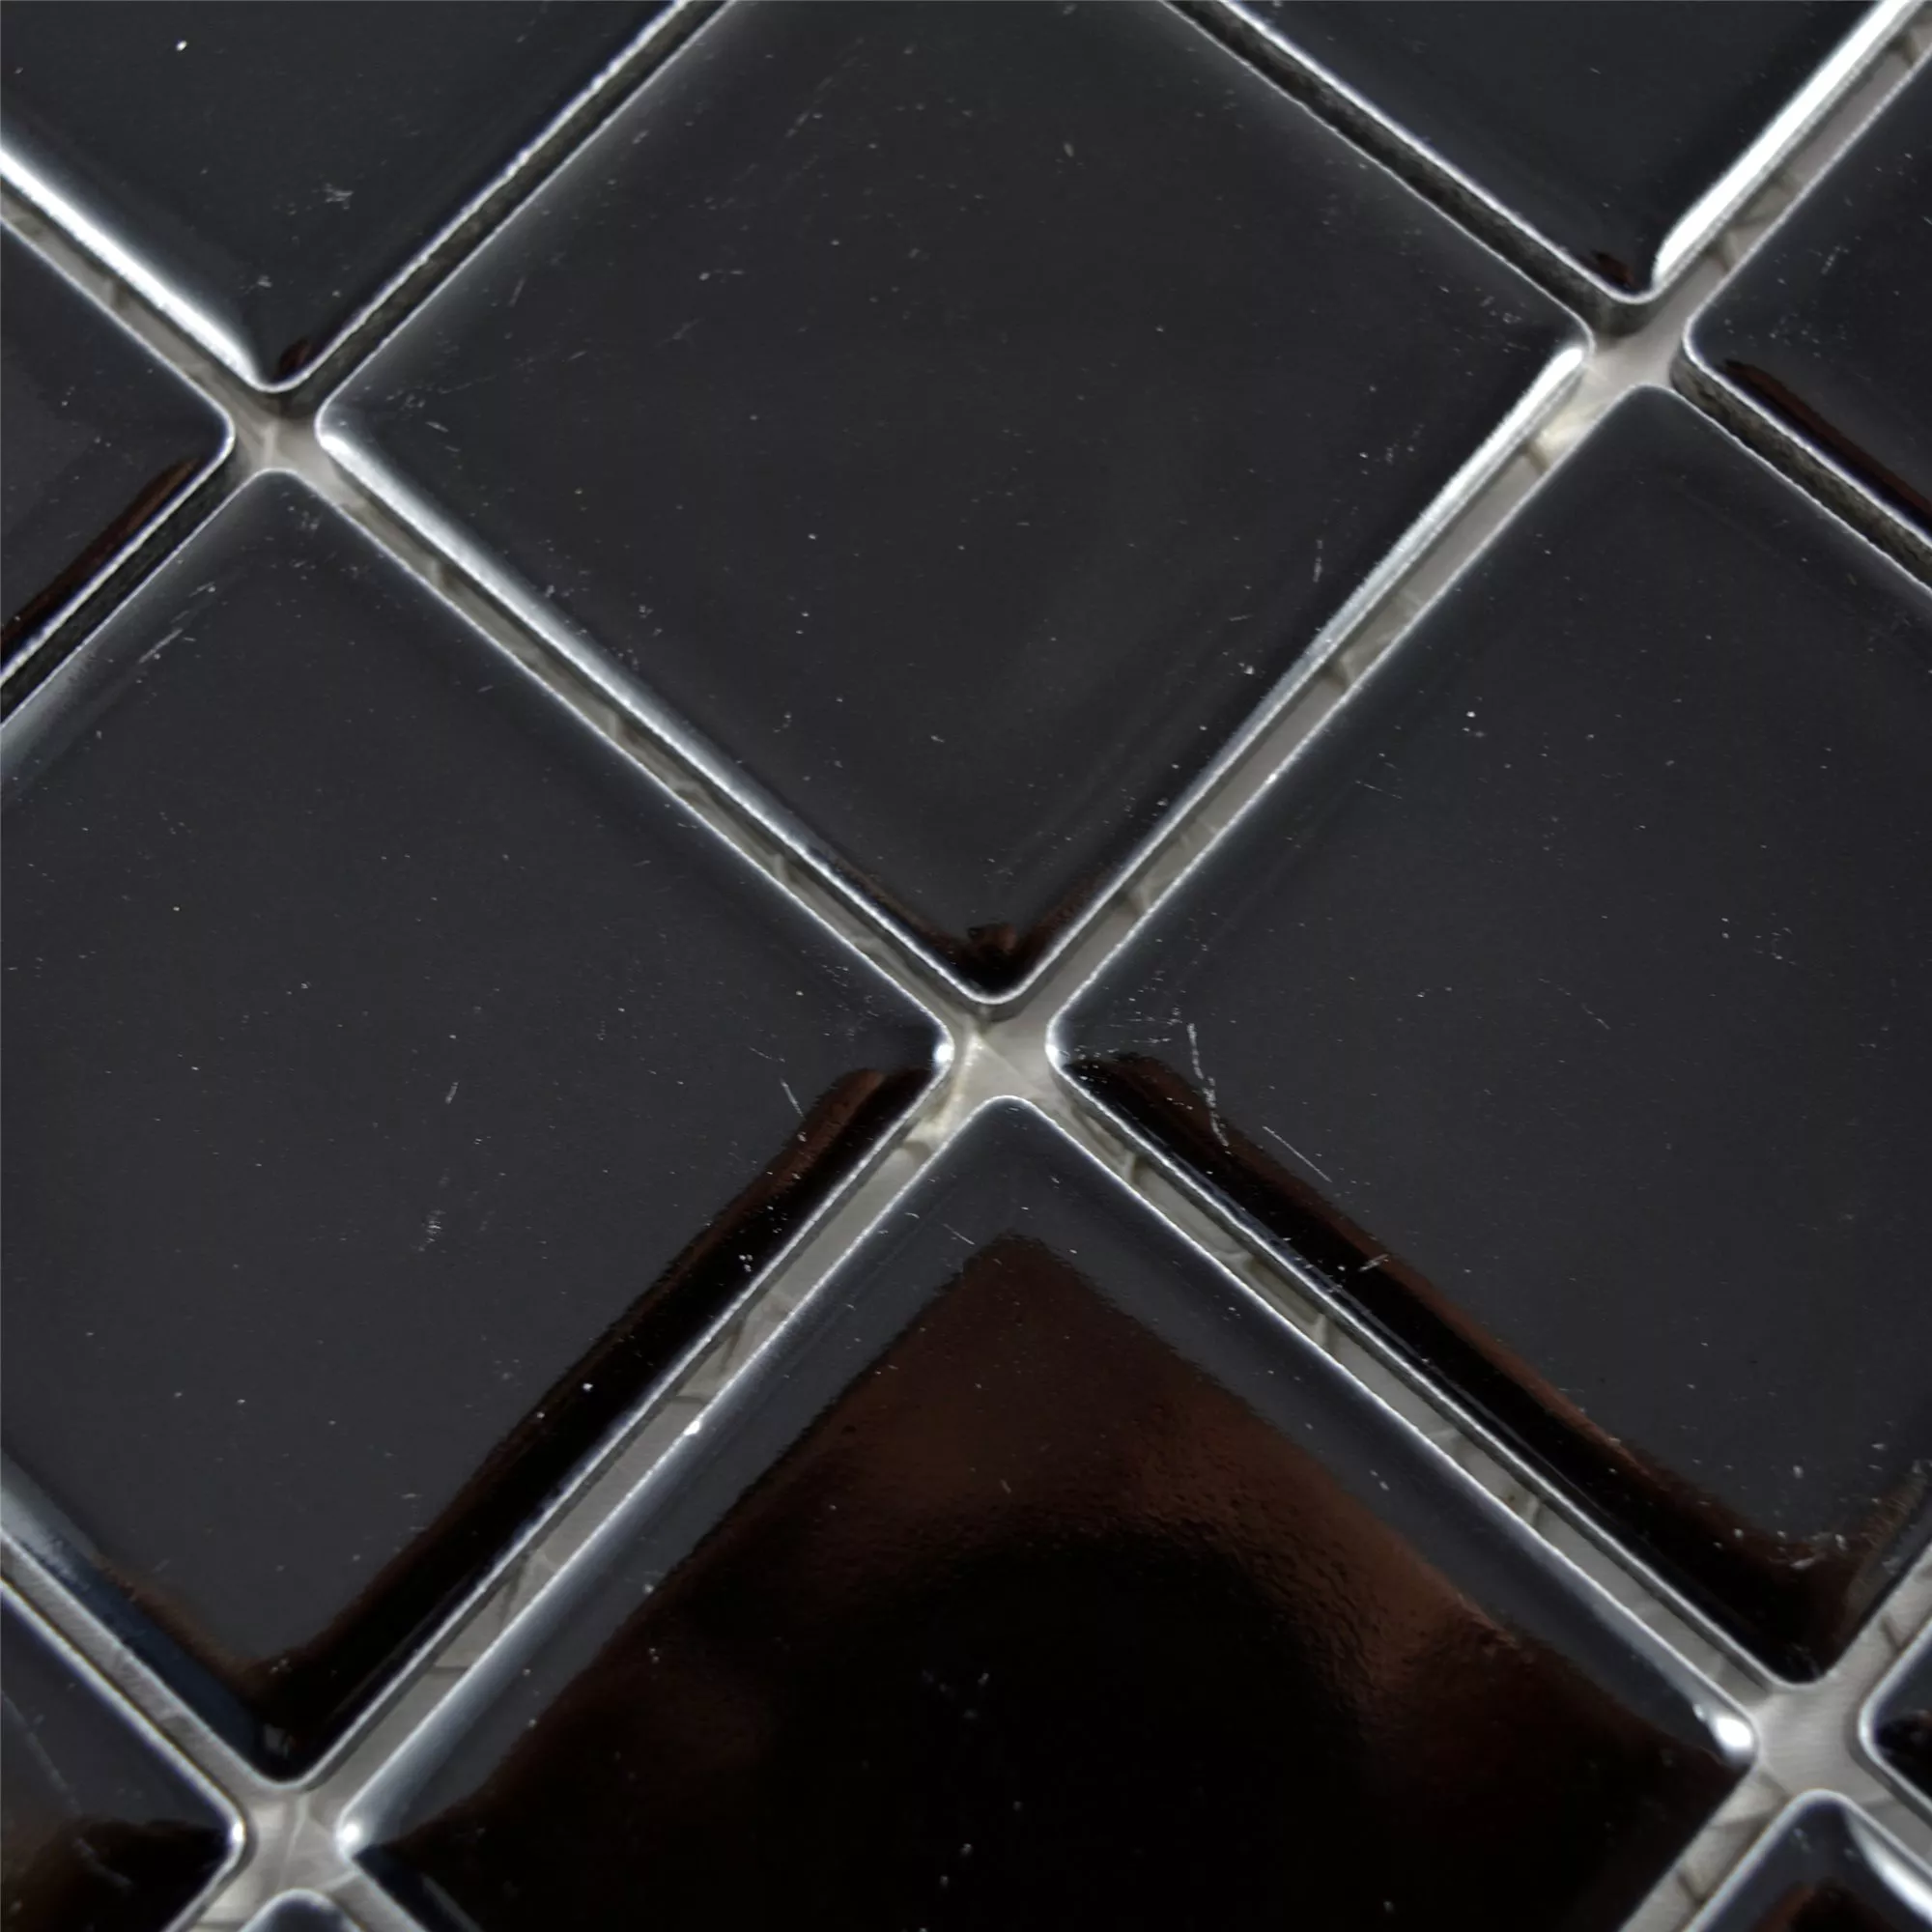 Ceramic Mosaic Tiles Adrian Black Glossy Square 48